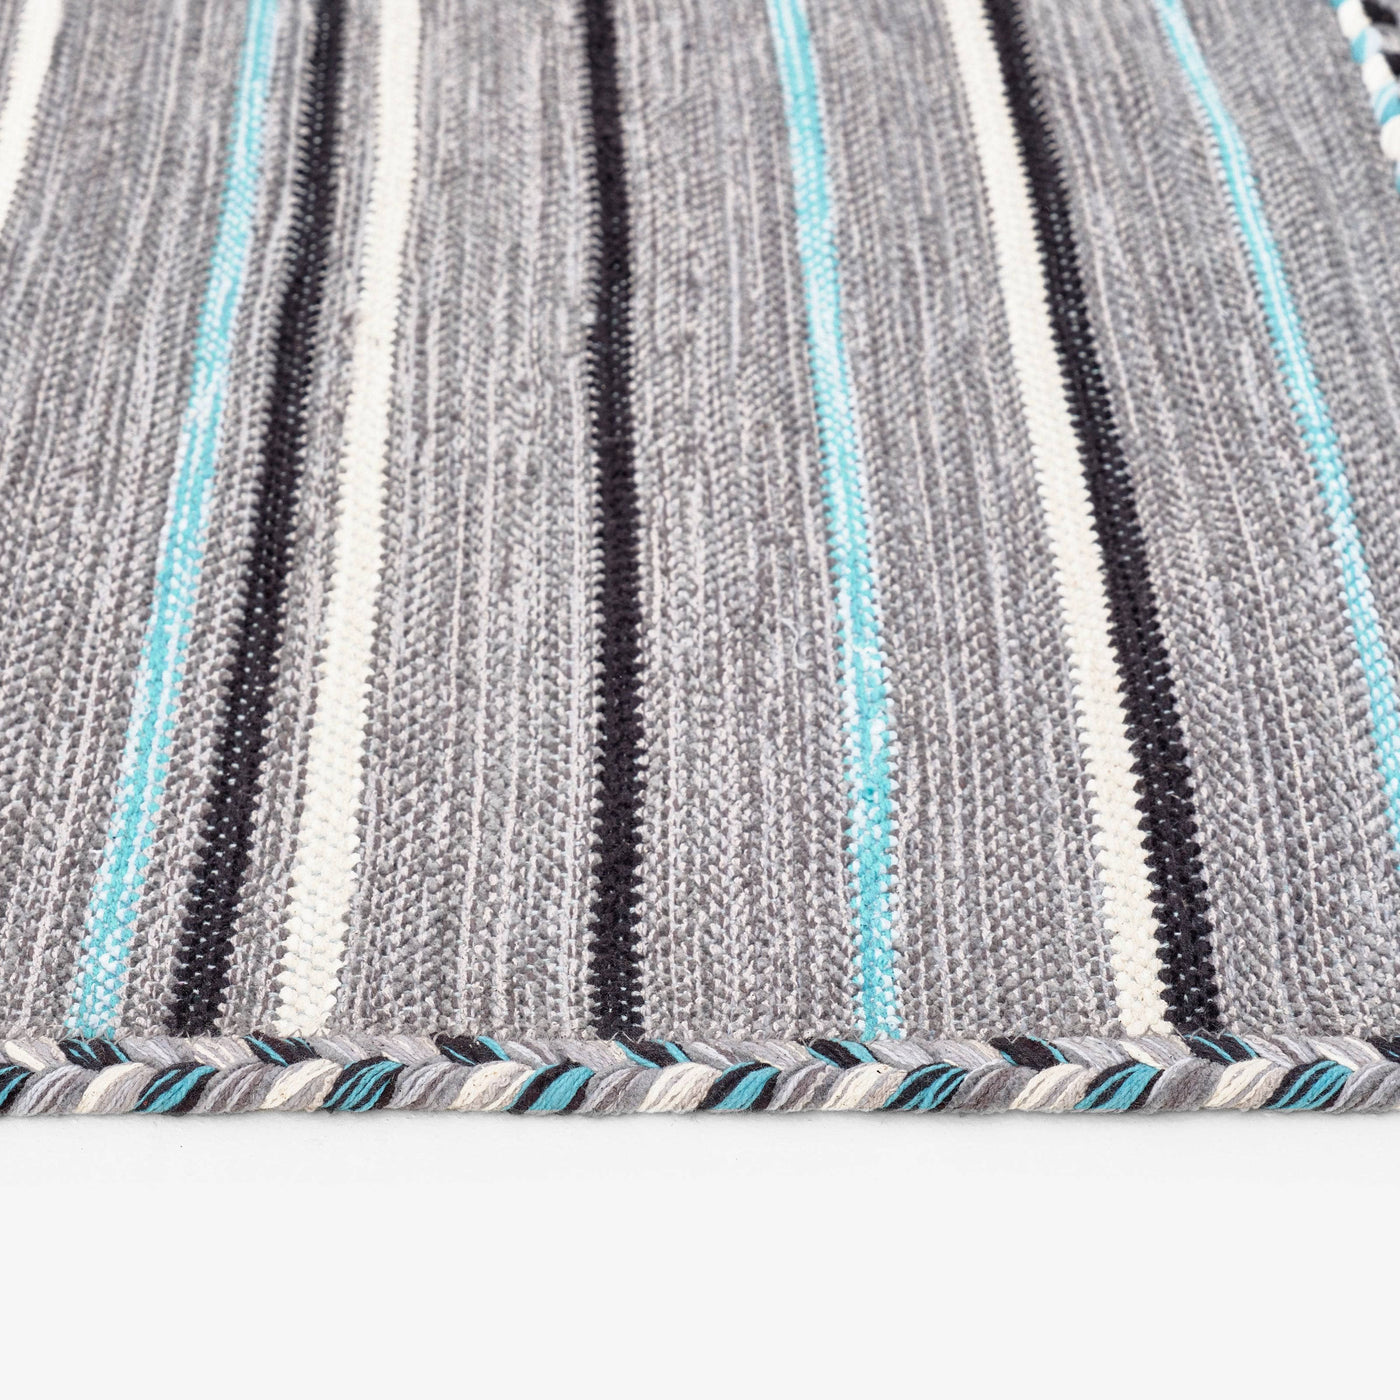 Osvaldo Handwoven Striped Rug, Grey, 120x180 cm Modern Rugs sazy.com